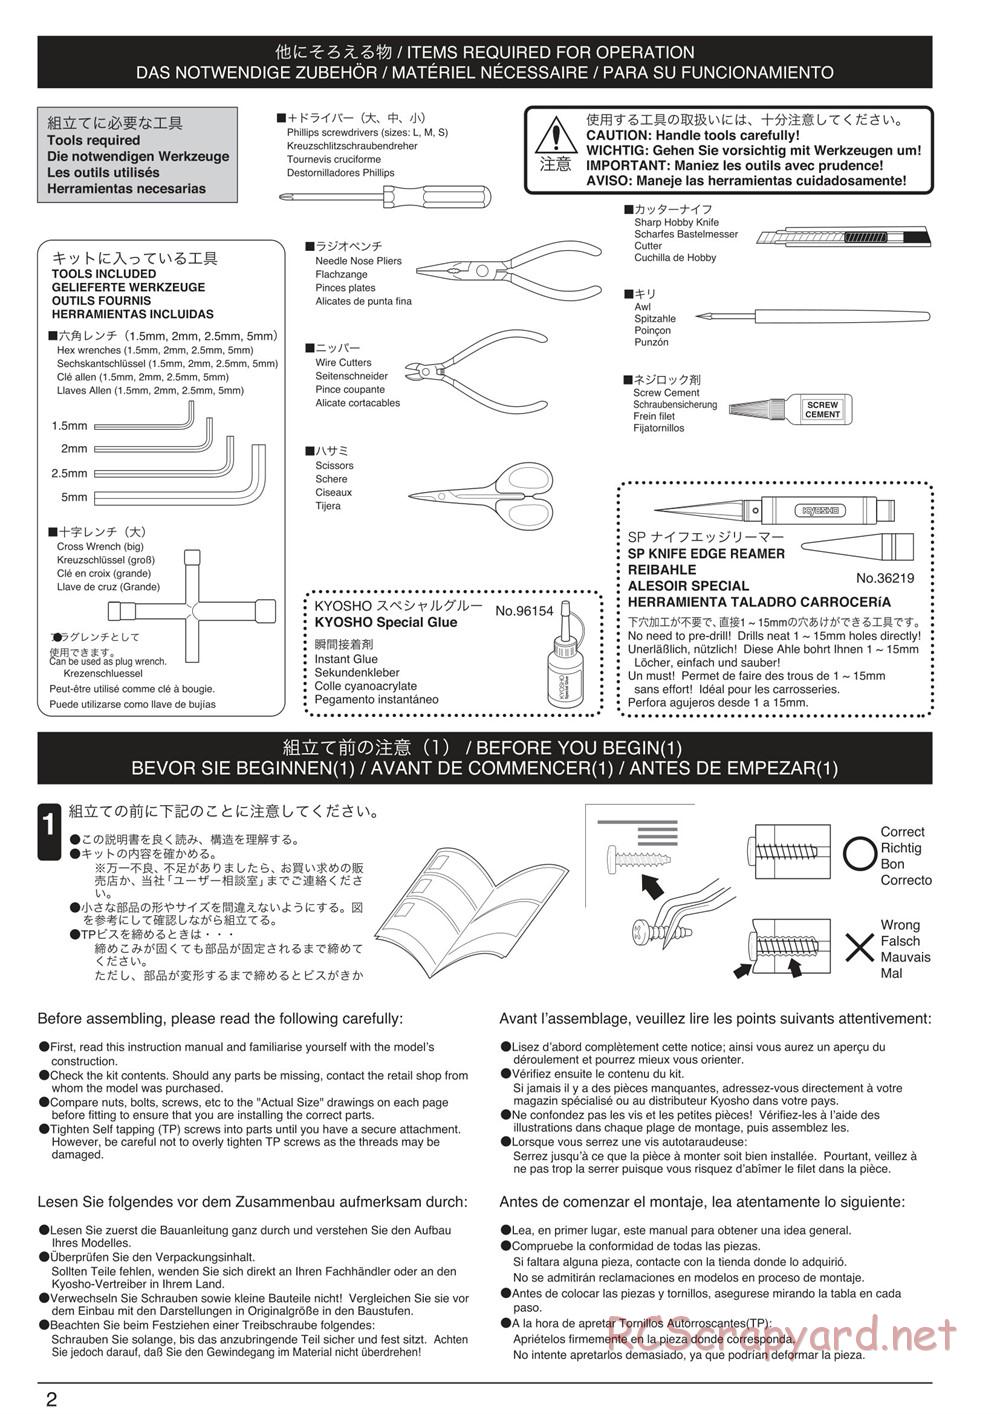 Kyosho - DRT - Manual - Page 2